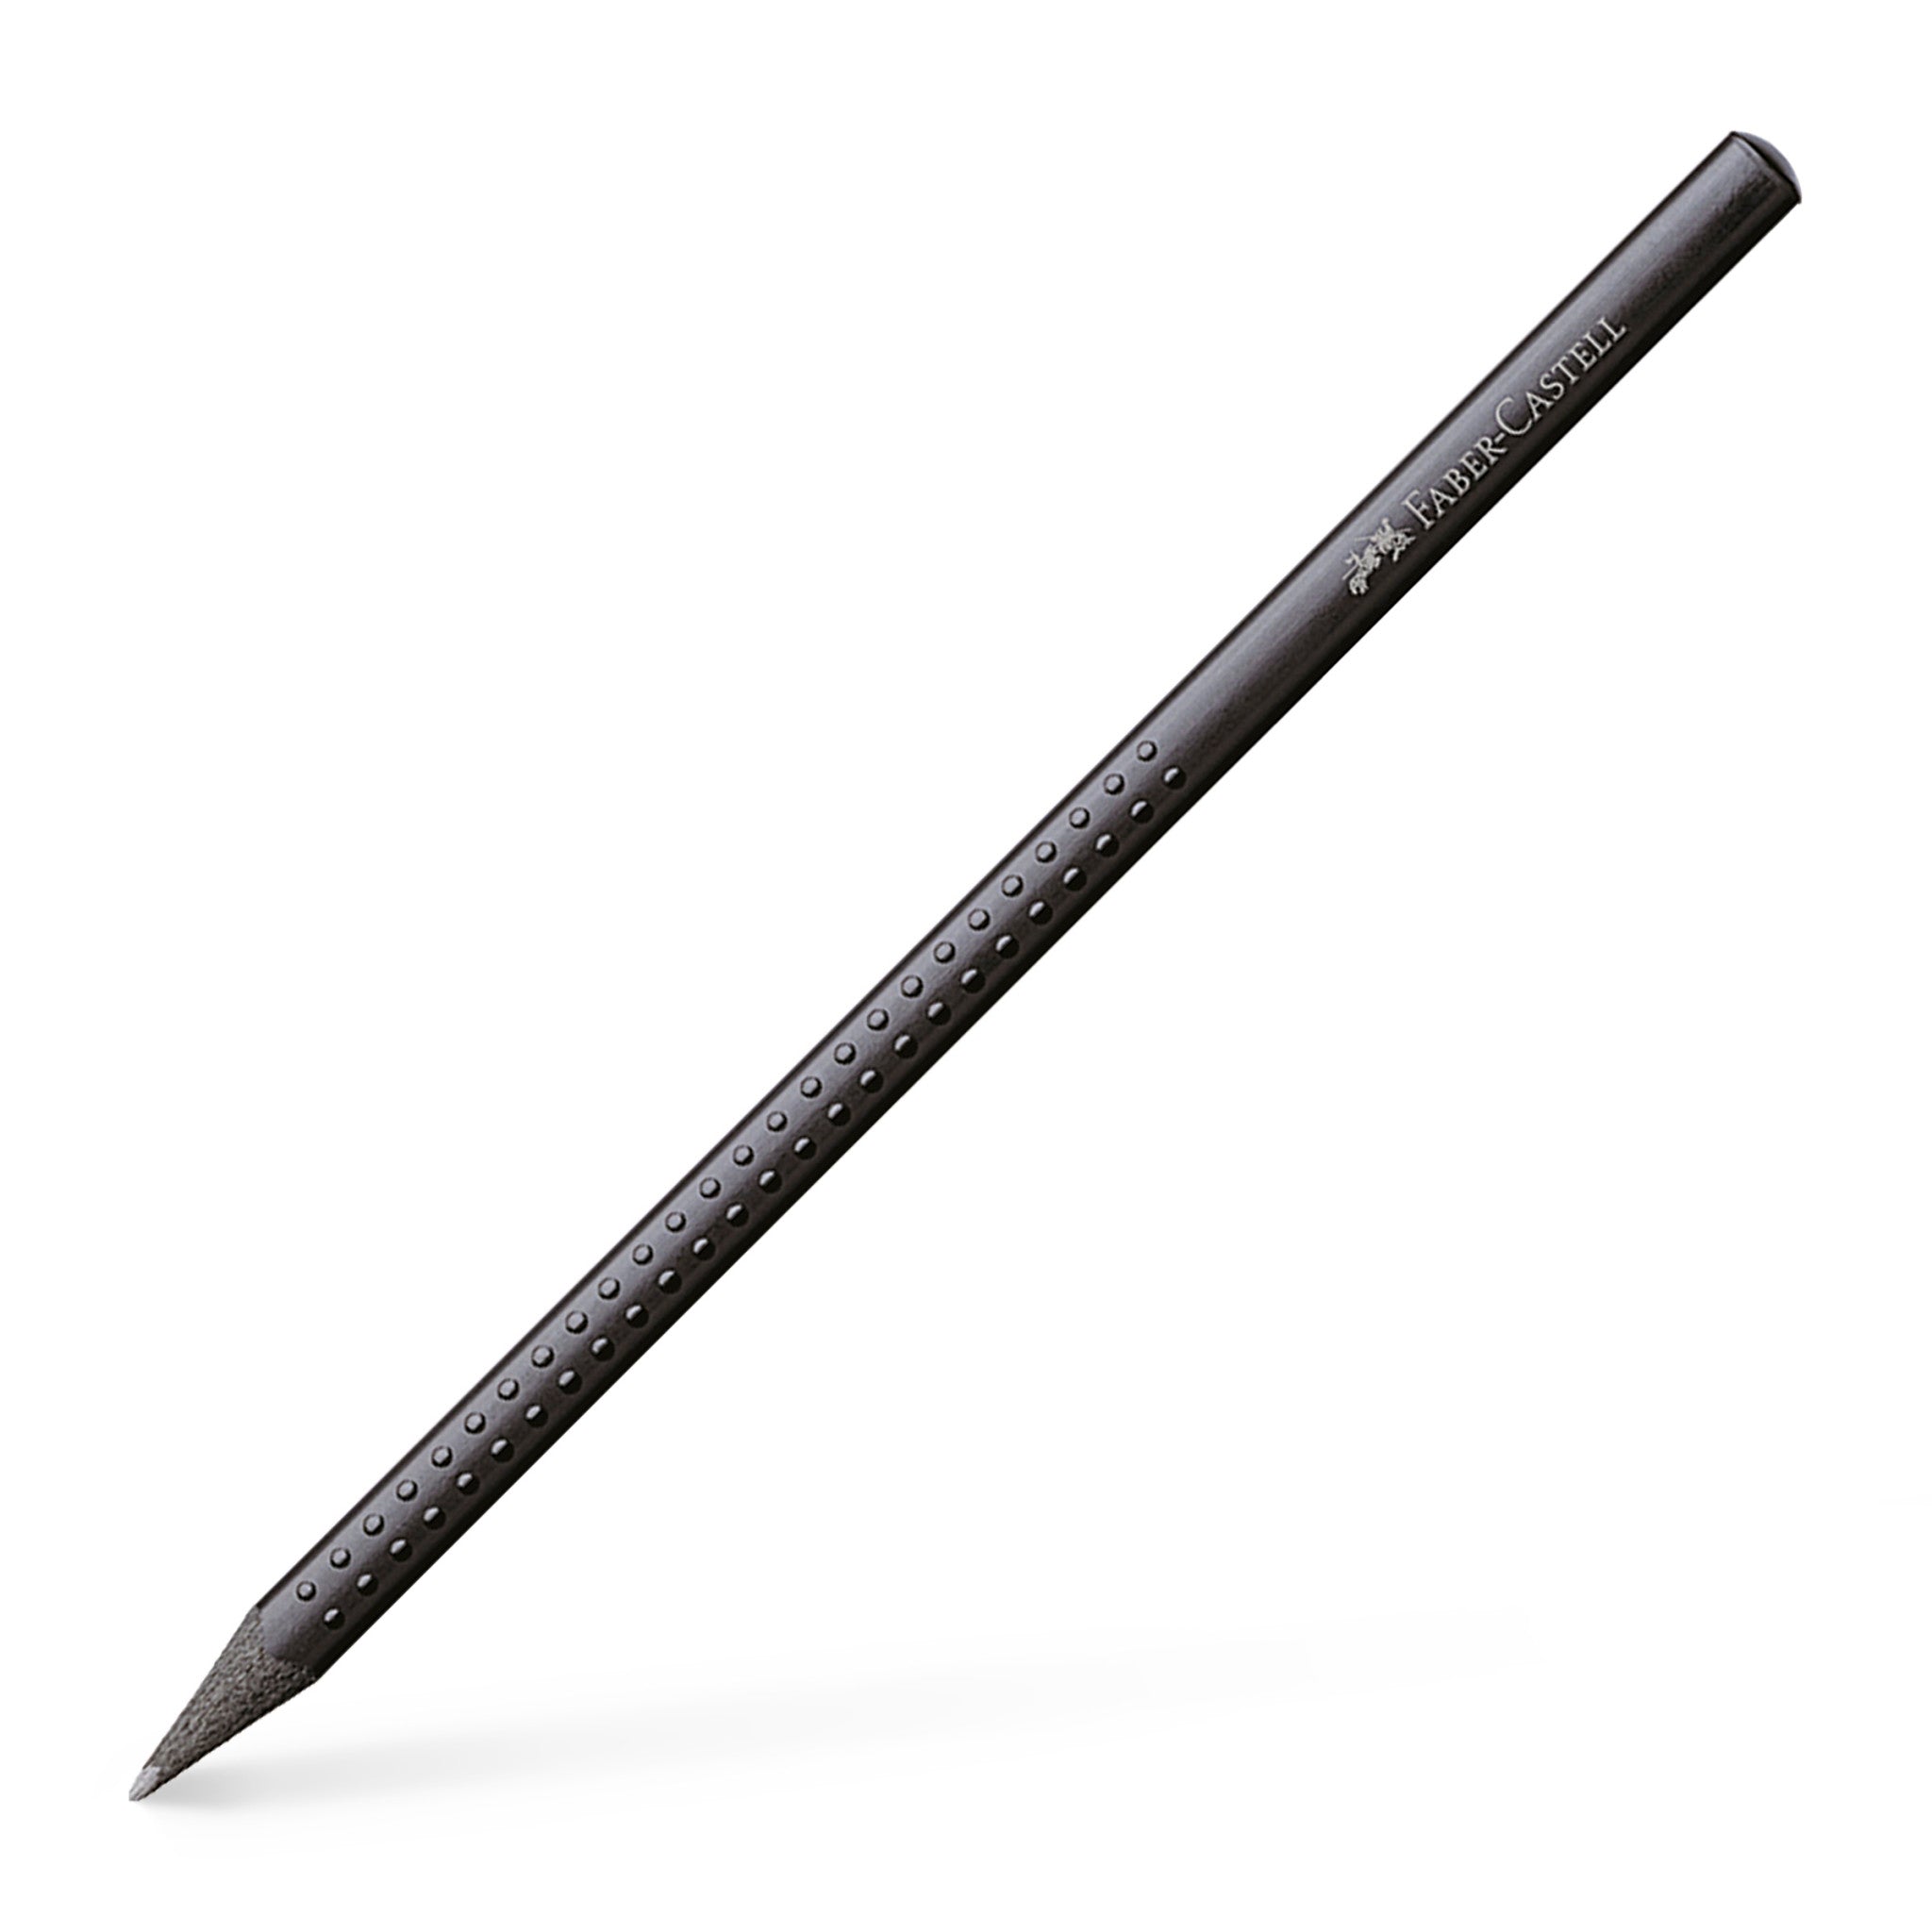 Faber Castell Black Grip Pencil B Bx/12